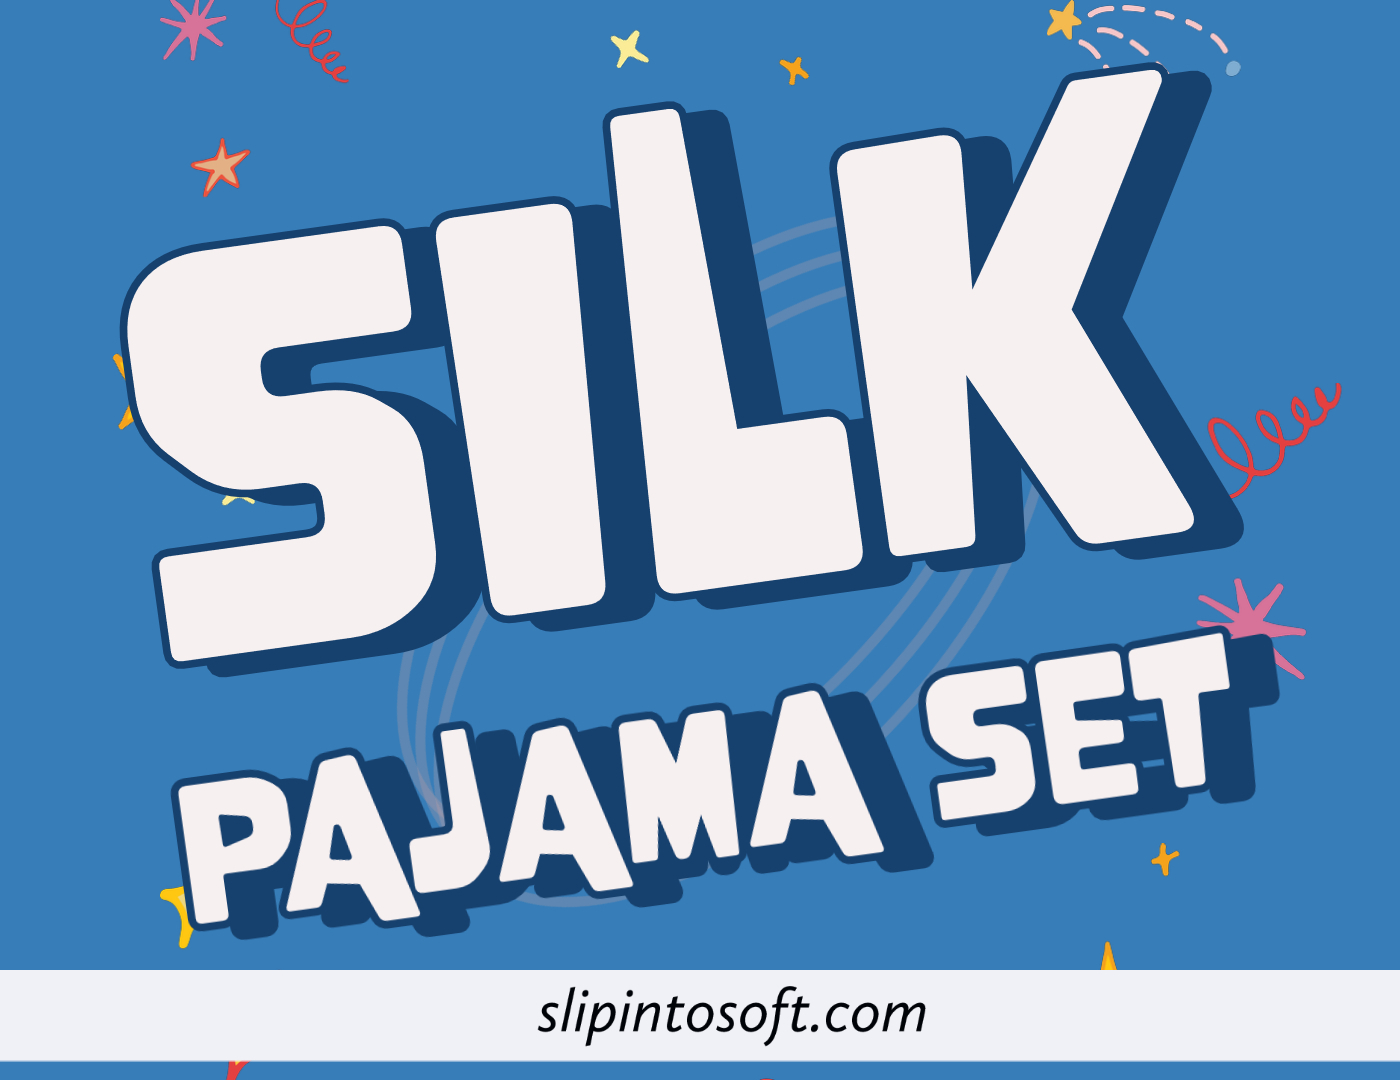 Silk Pajama Sets